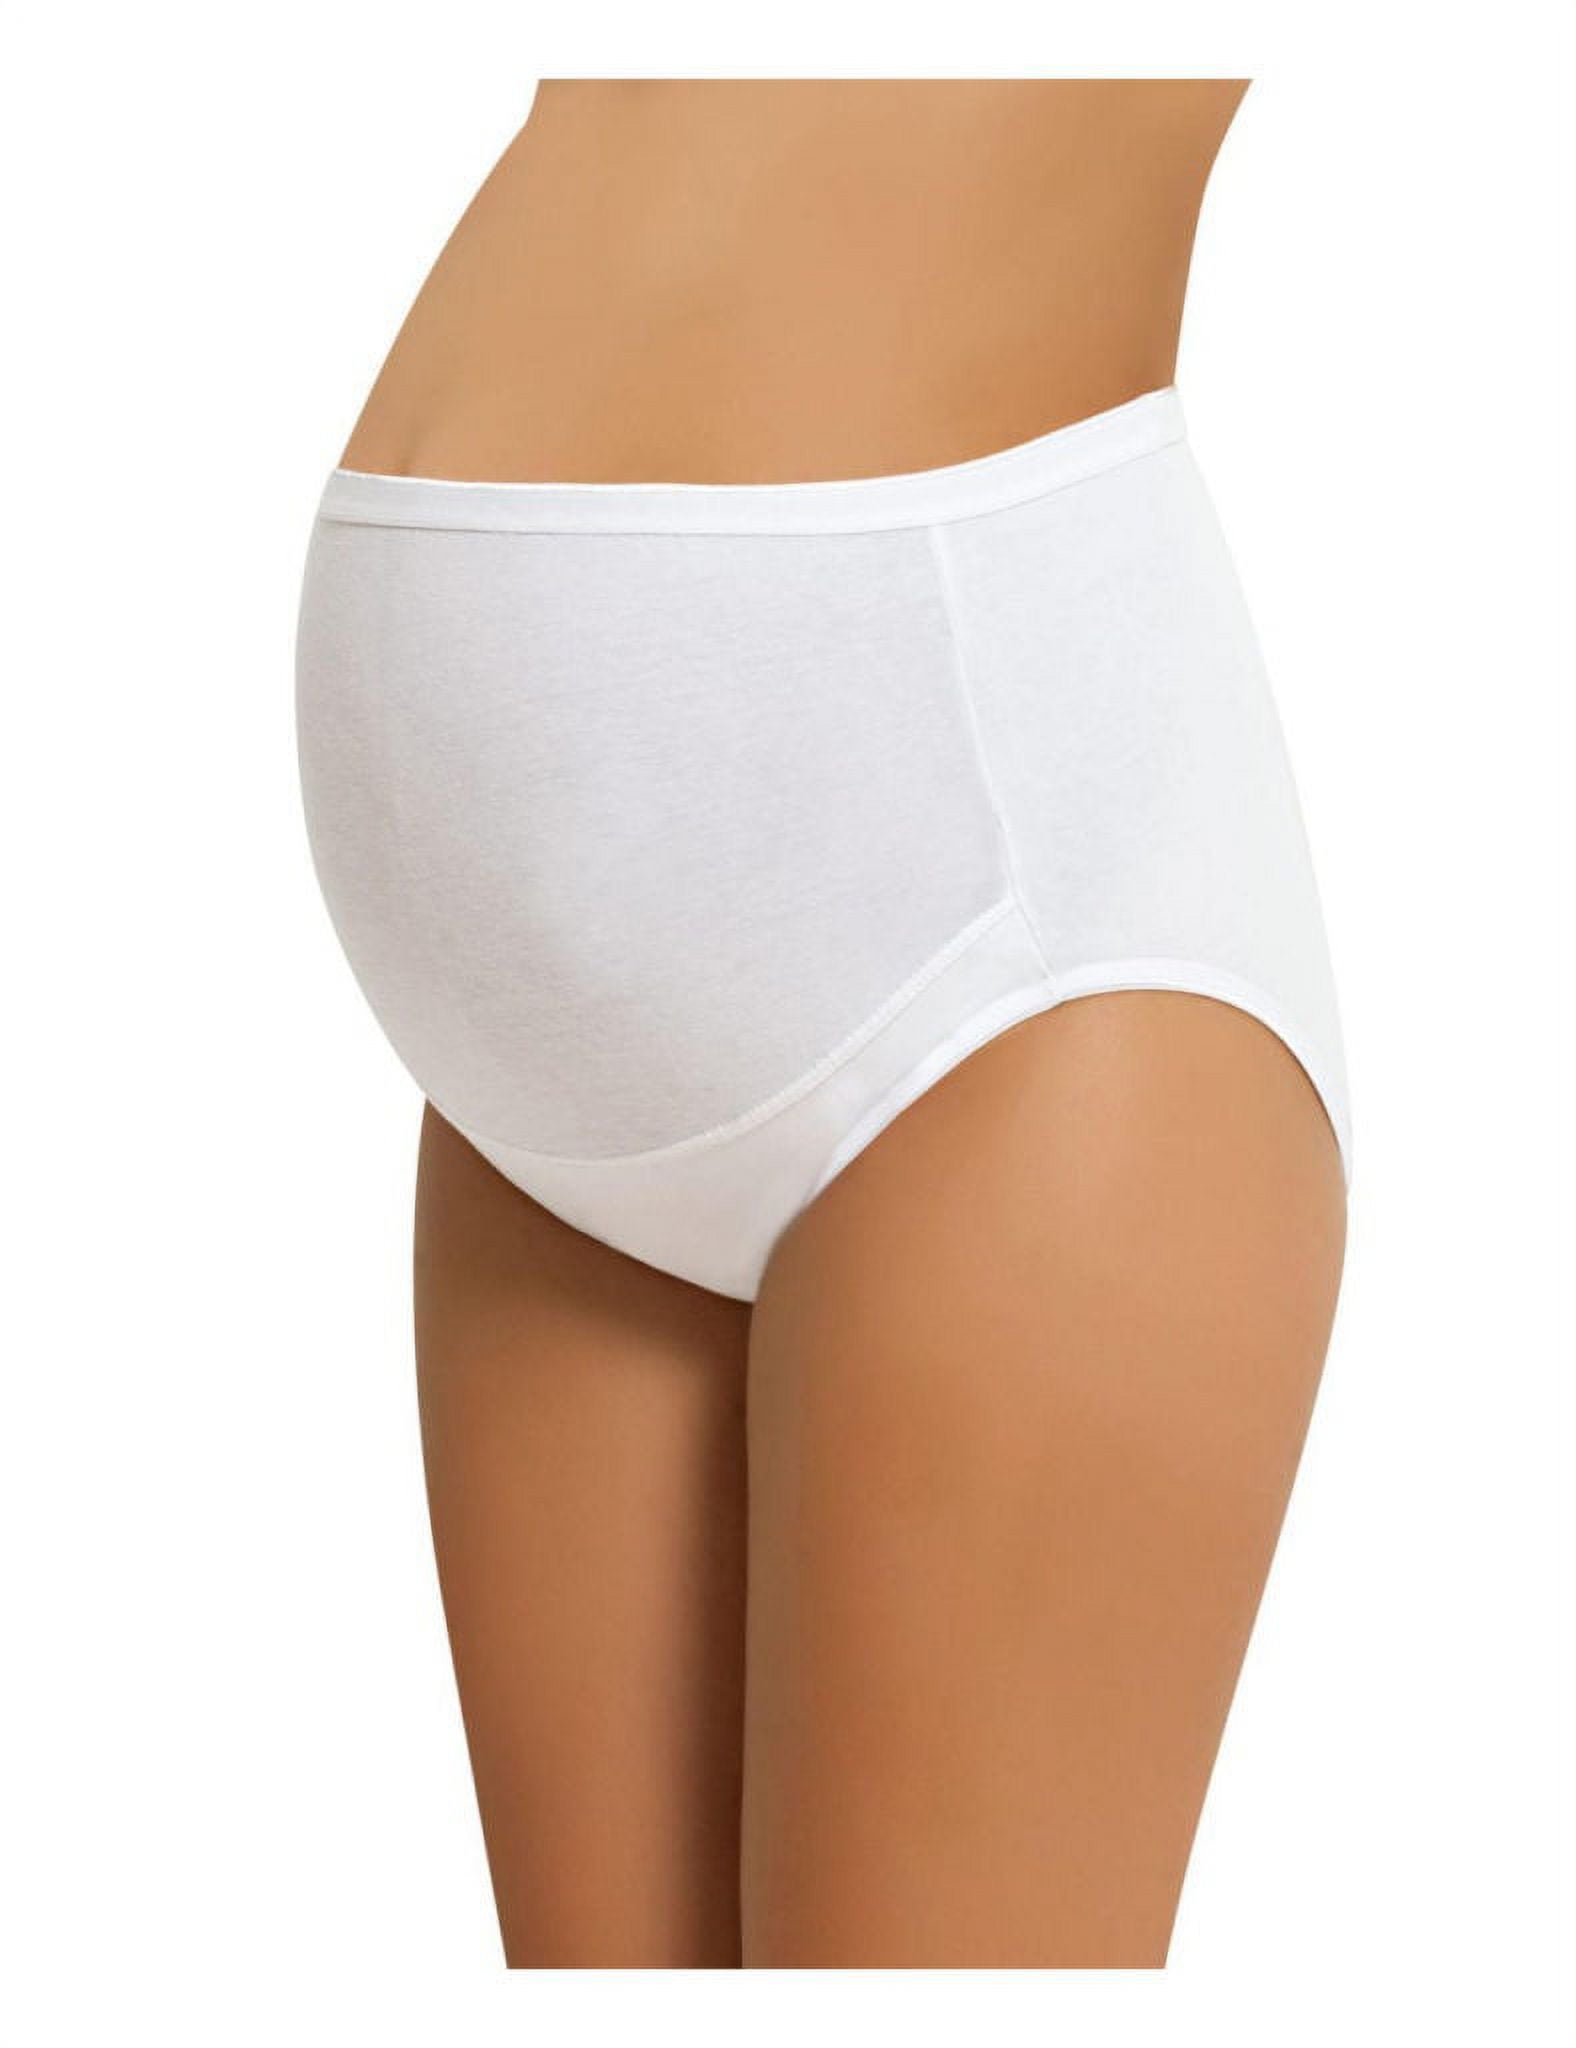 NBB Women's Adjustable Maternity high cut 100% Cotton underwear Brief  (White, XXX-Large) 